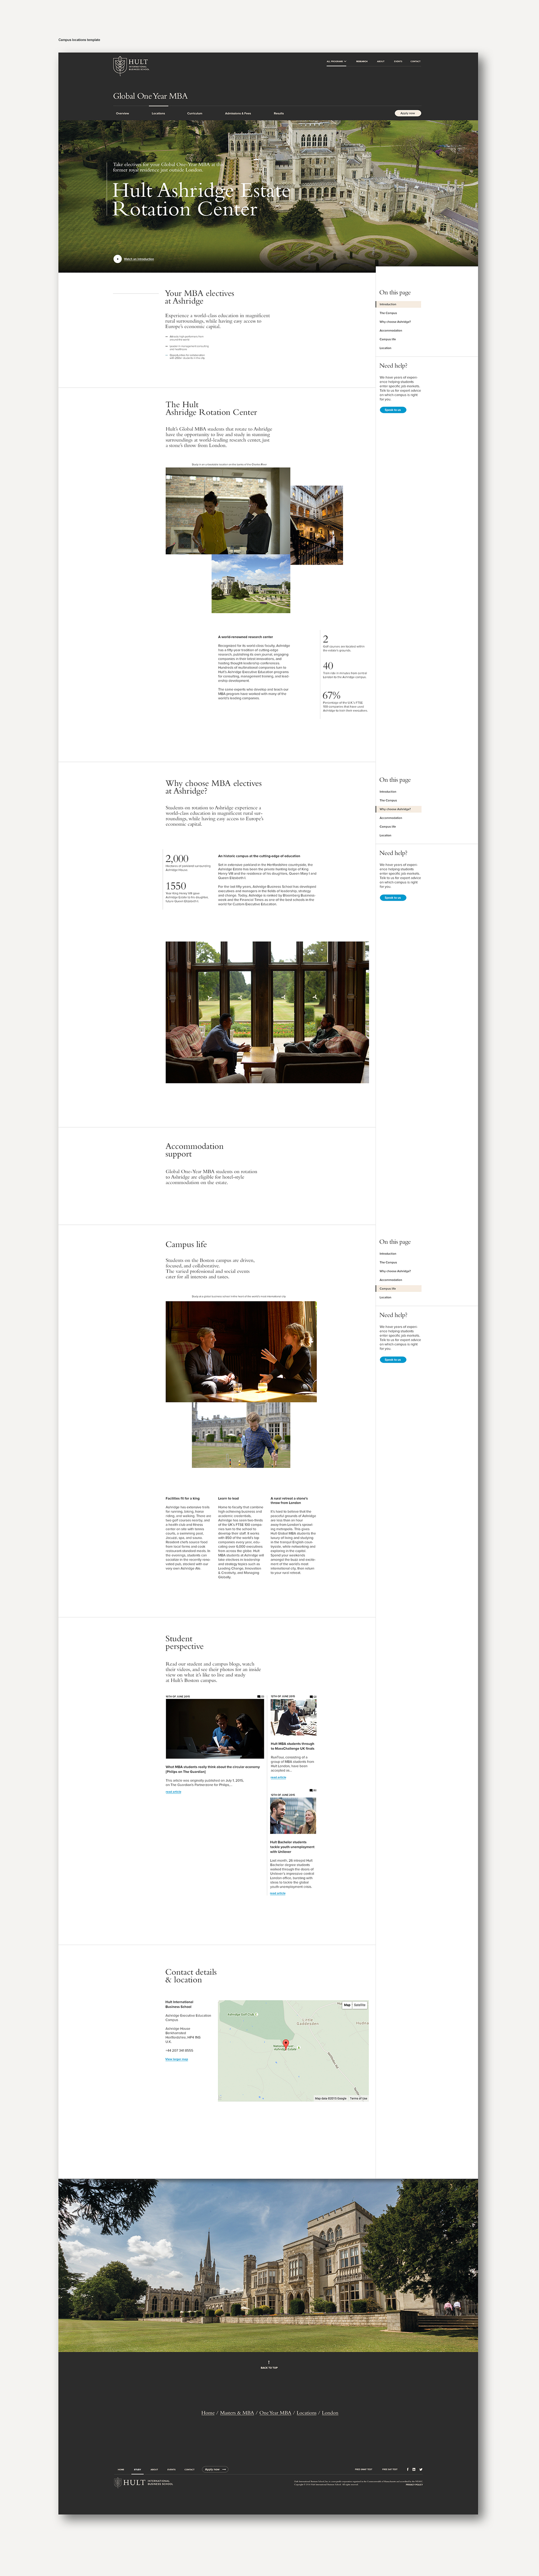 Web design school business academic Responsive mobile tablet desktop black White